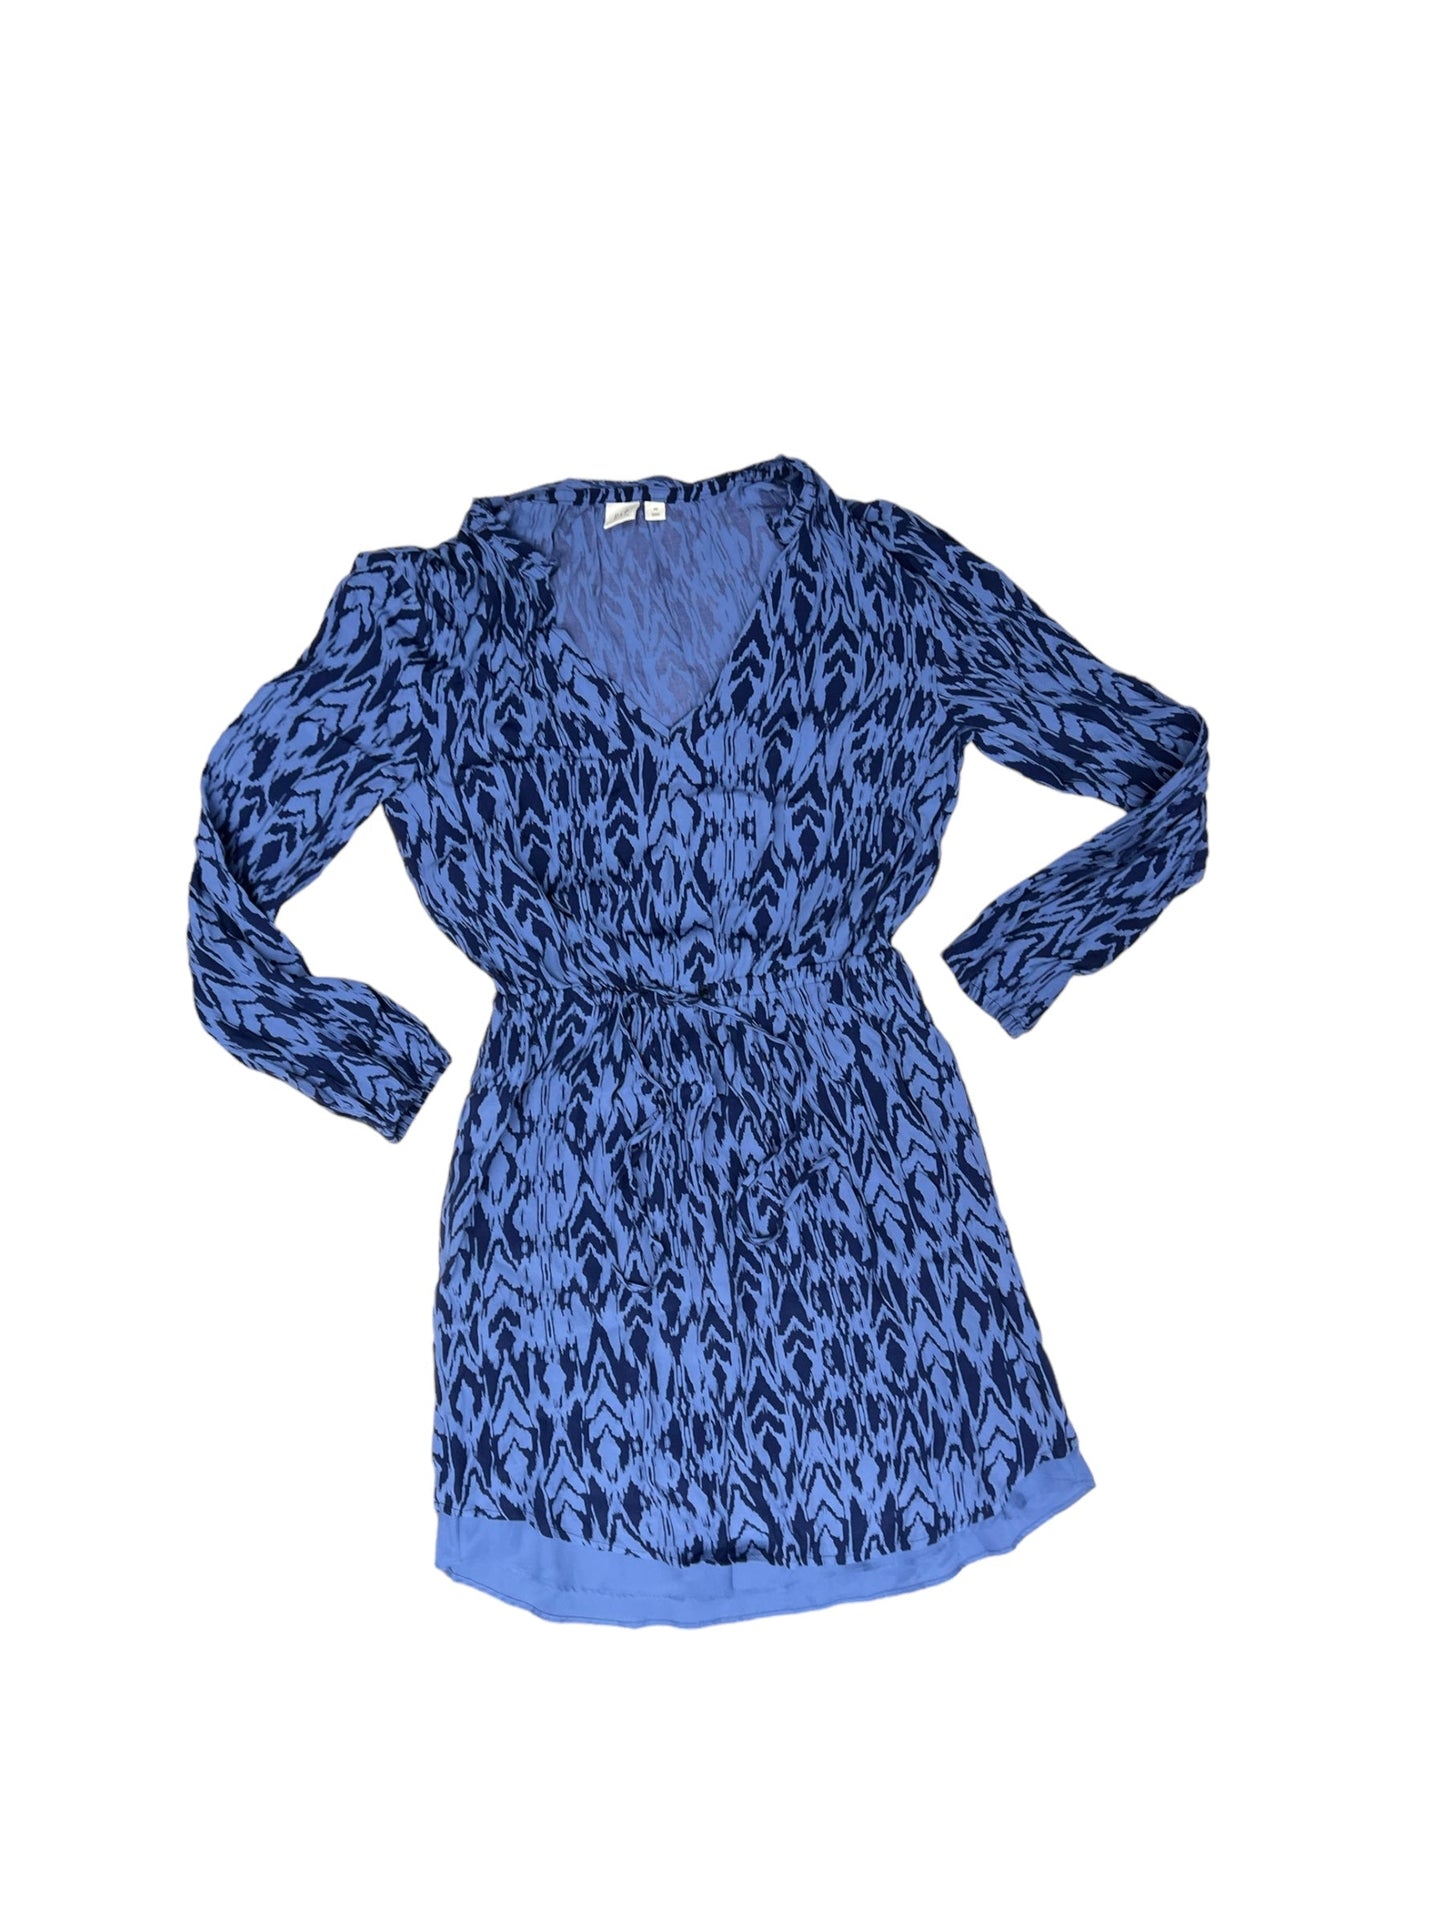 Blue Dress Casual Short Gap, Size Xs